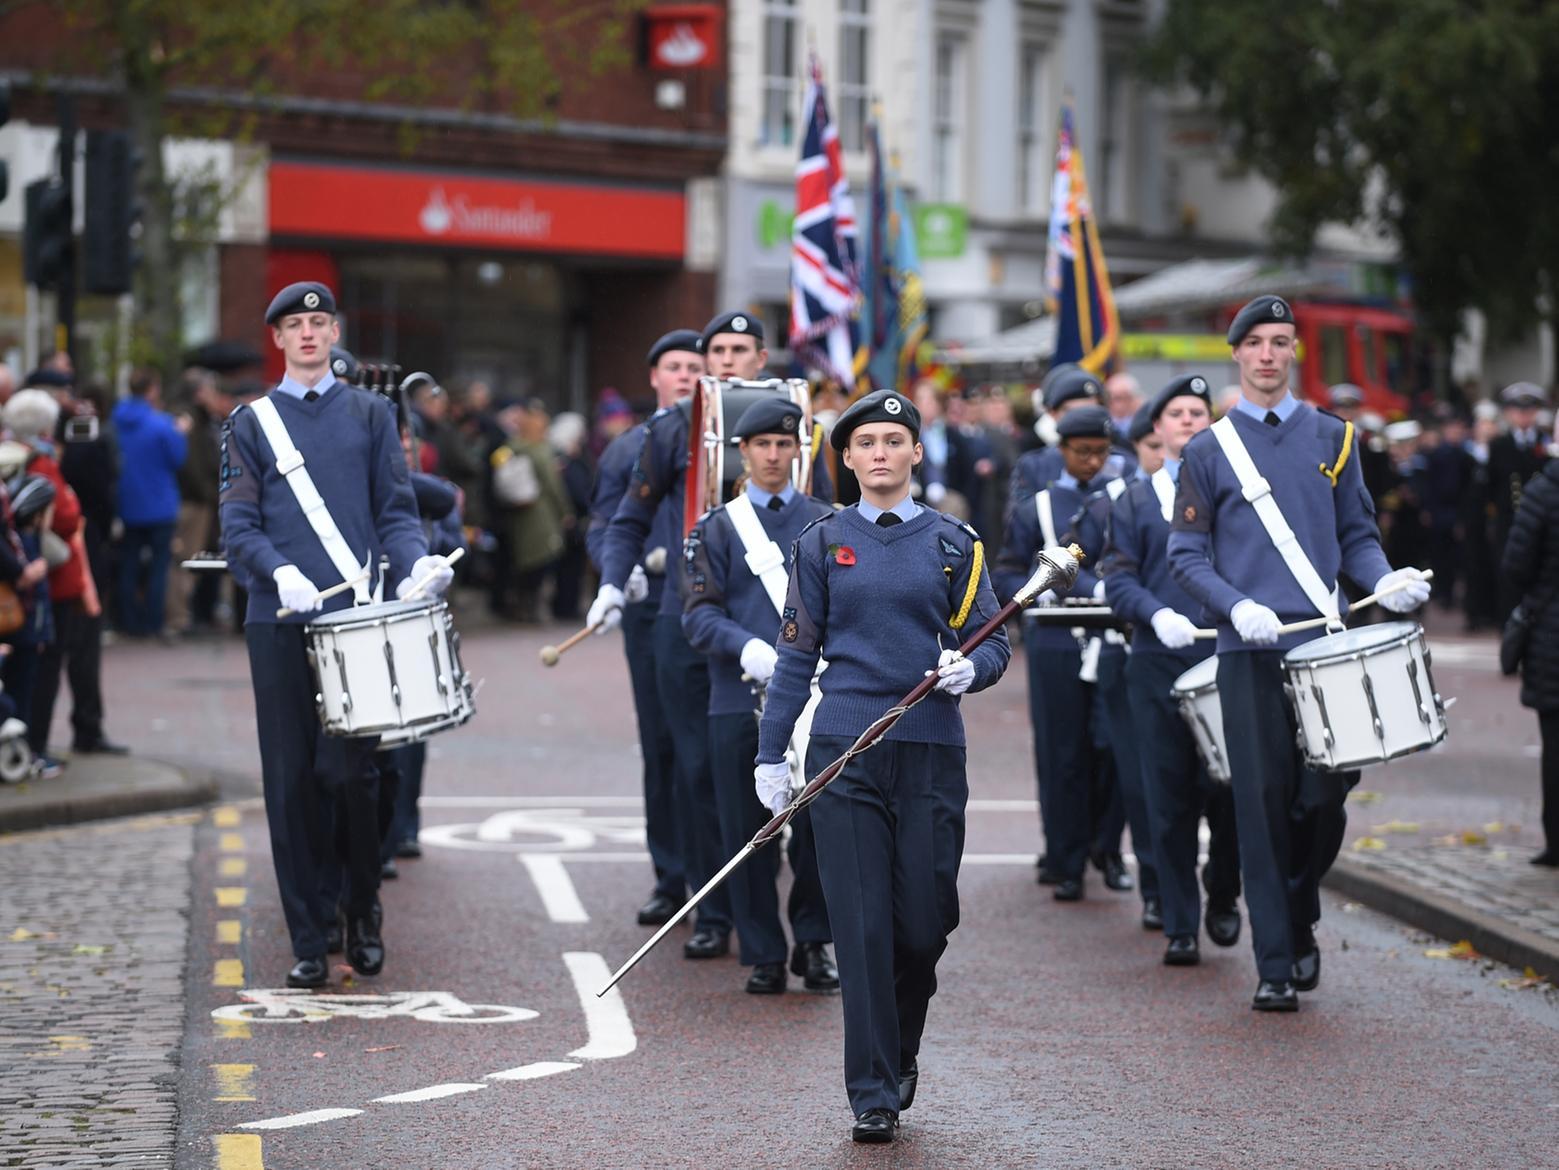 Market Harborough 1084 Squadrun during the remembrance parade.